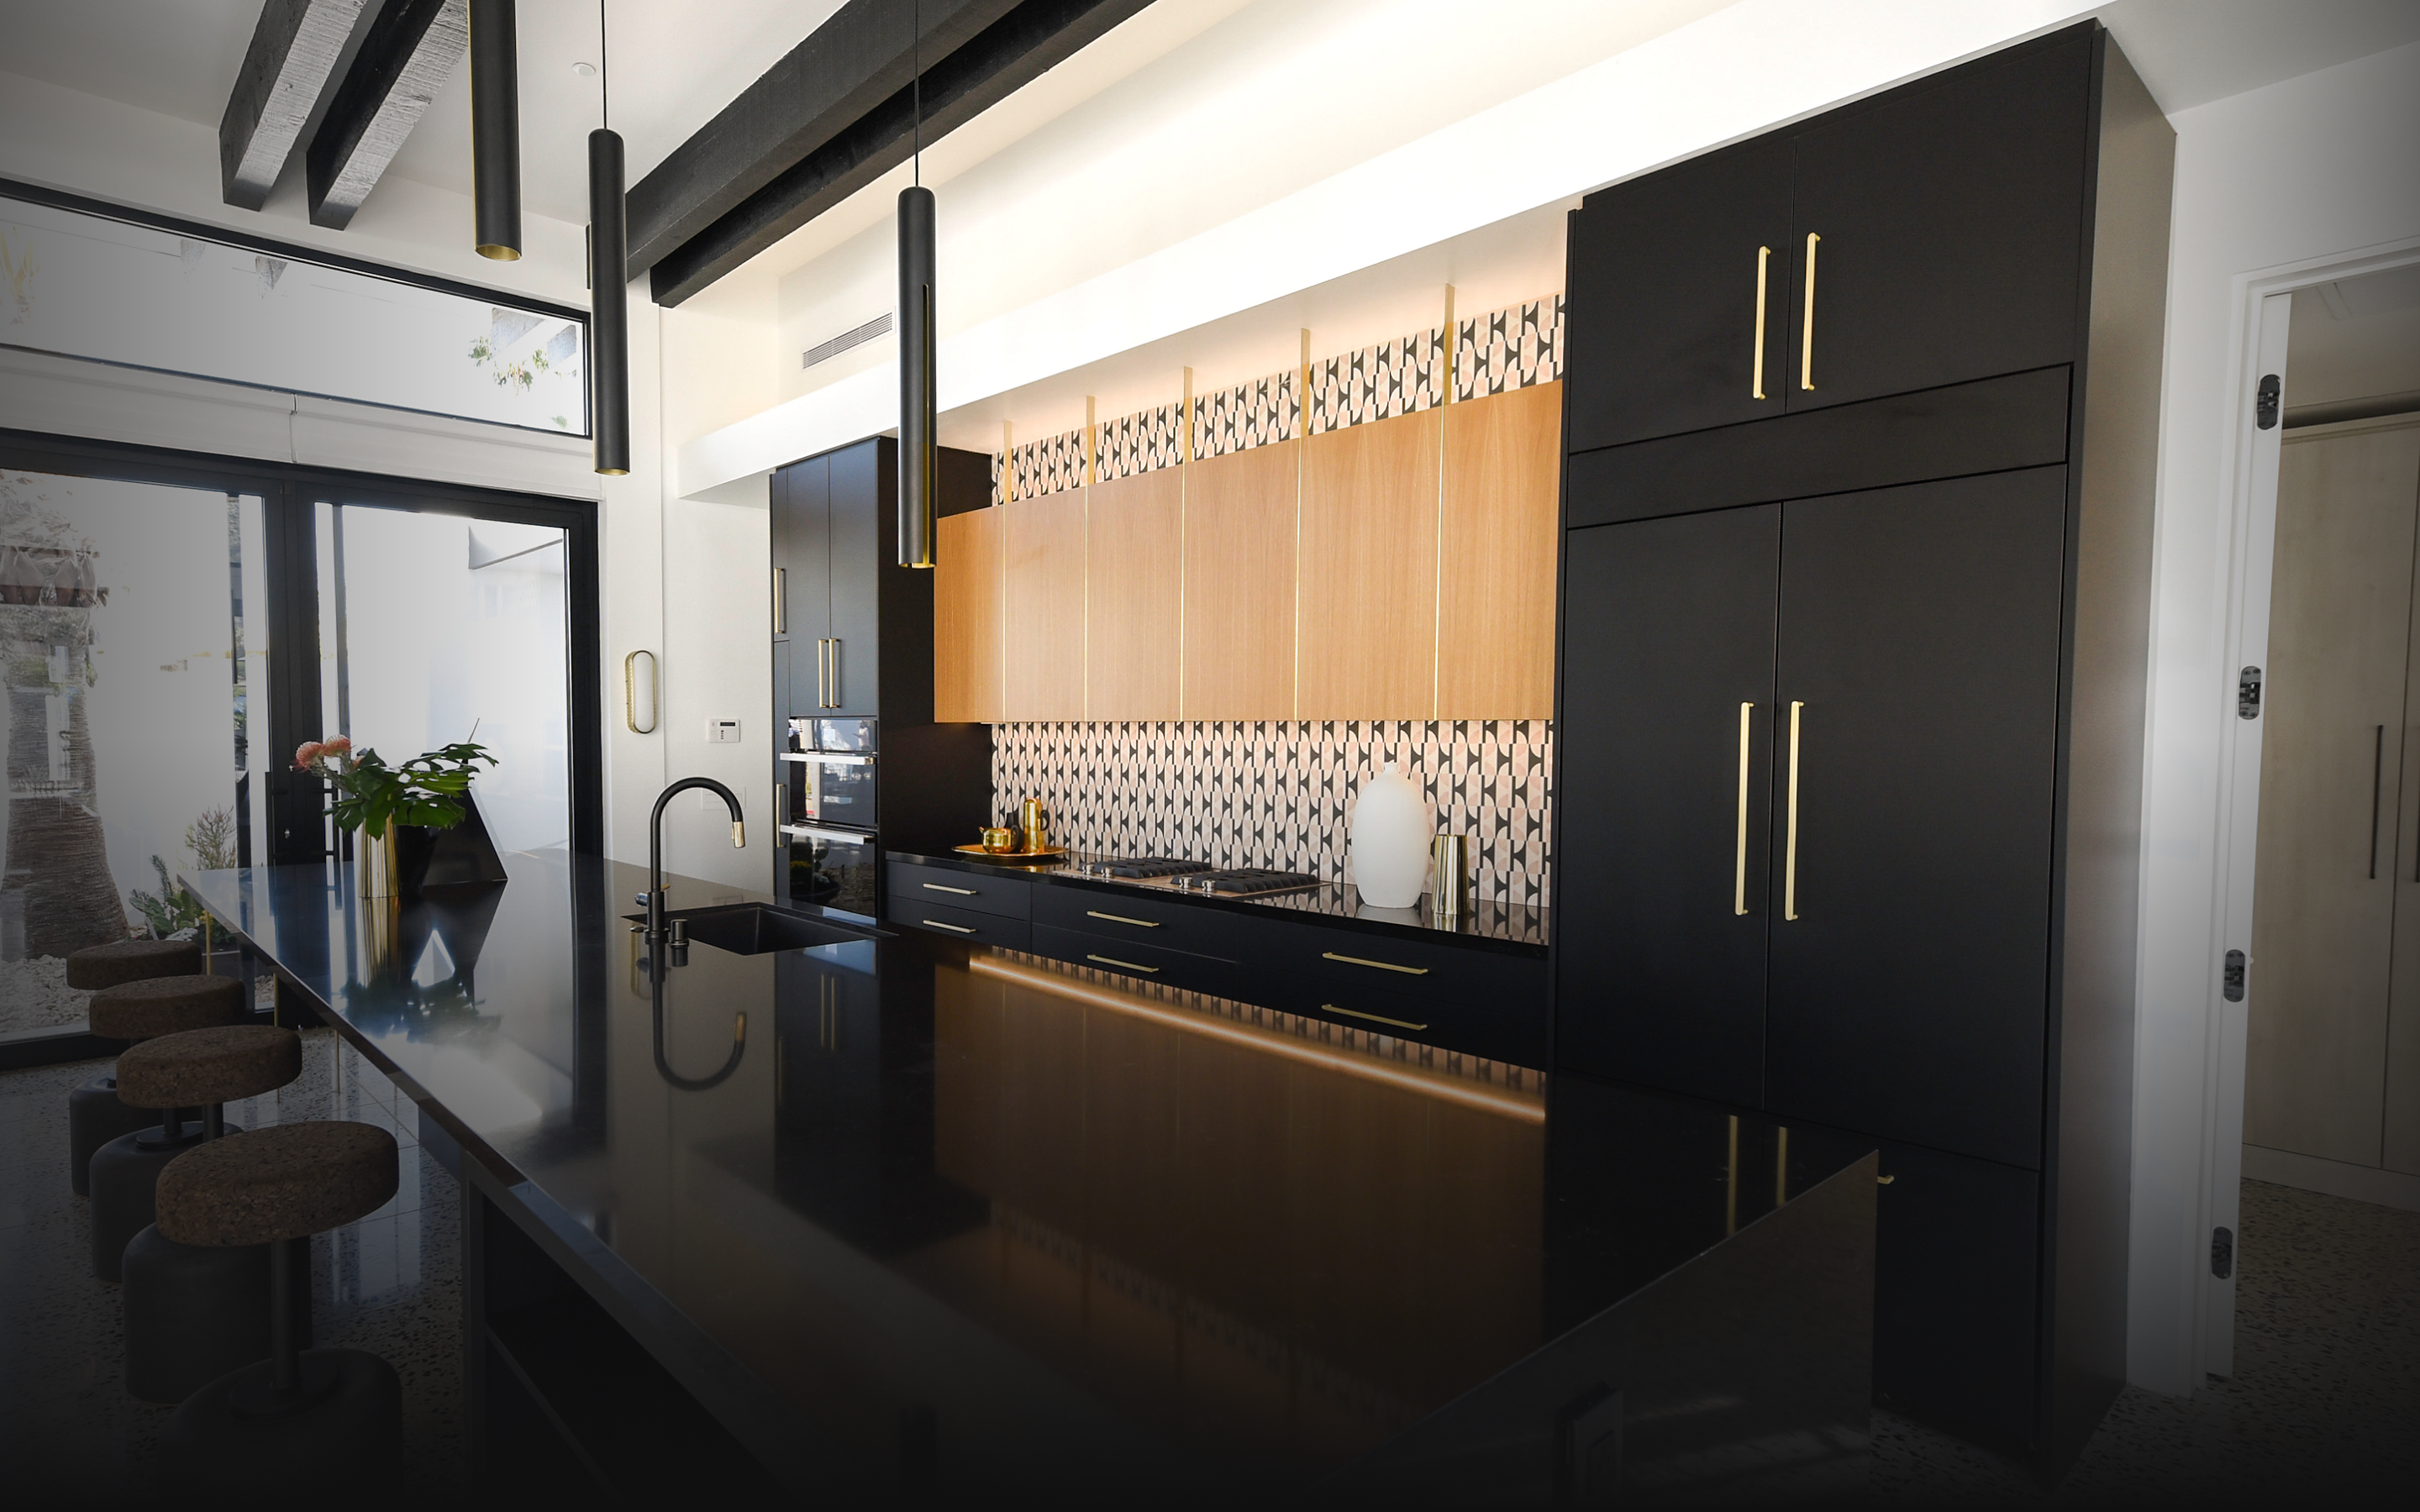  A black and gold modern kitchen featuring JennAir® appliances.